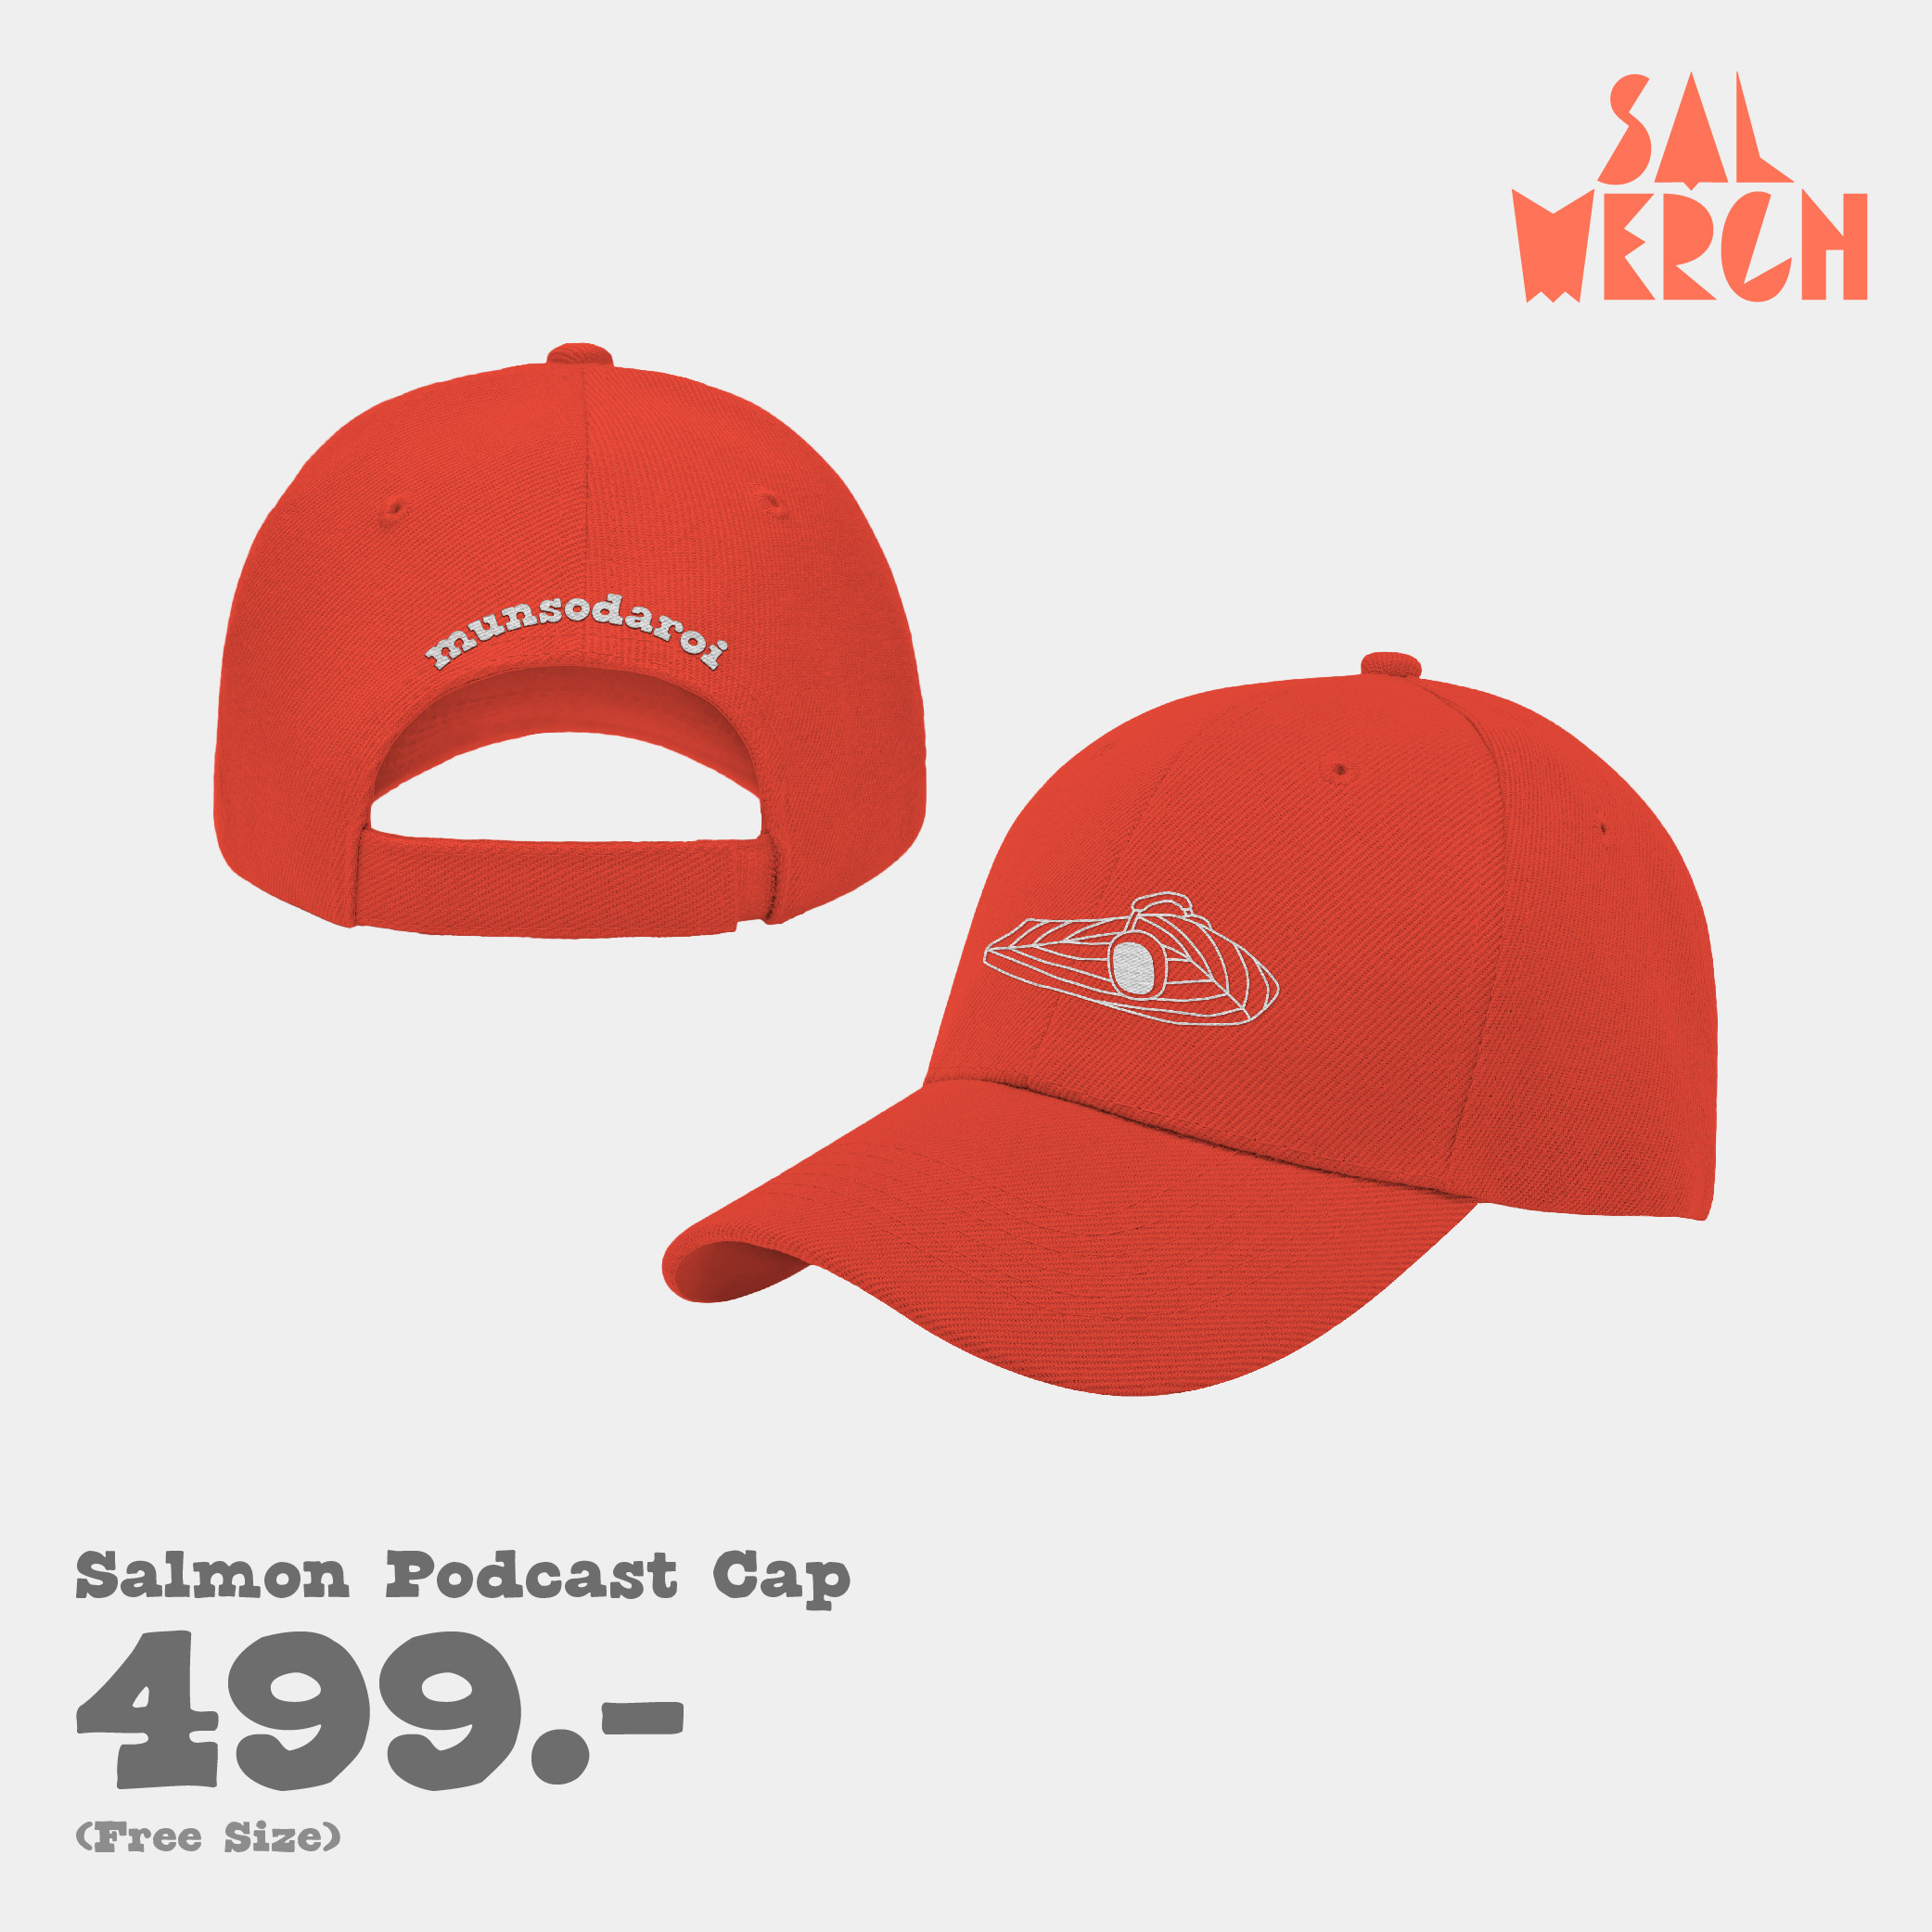 Salmon Podcast Cap